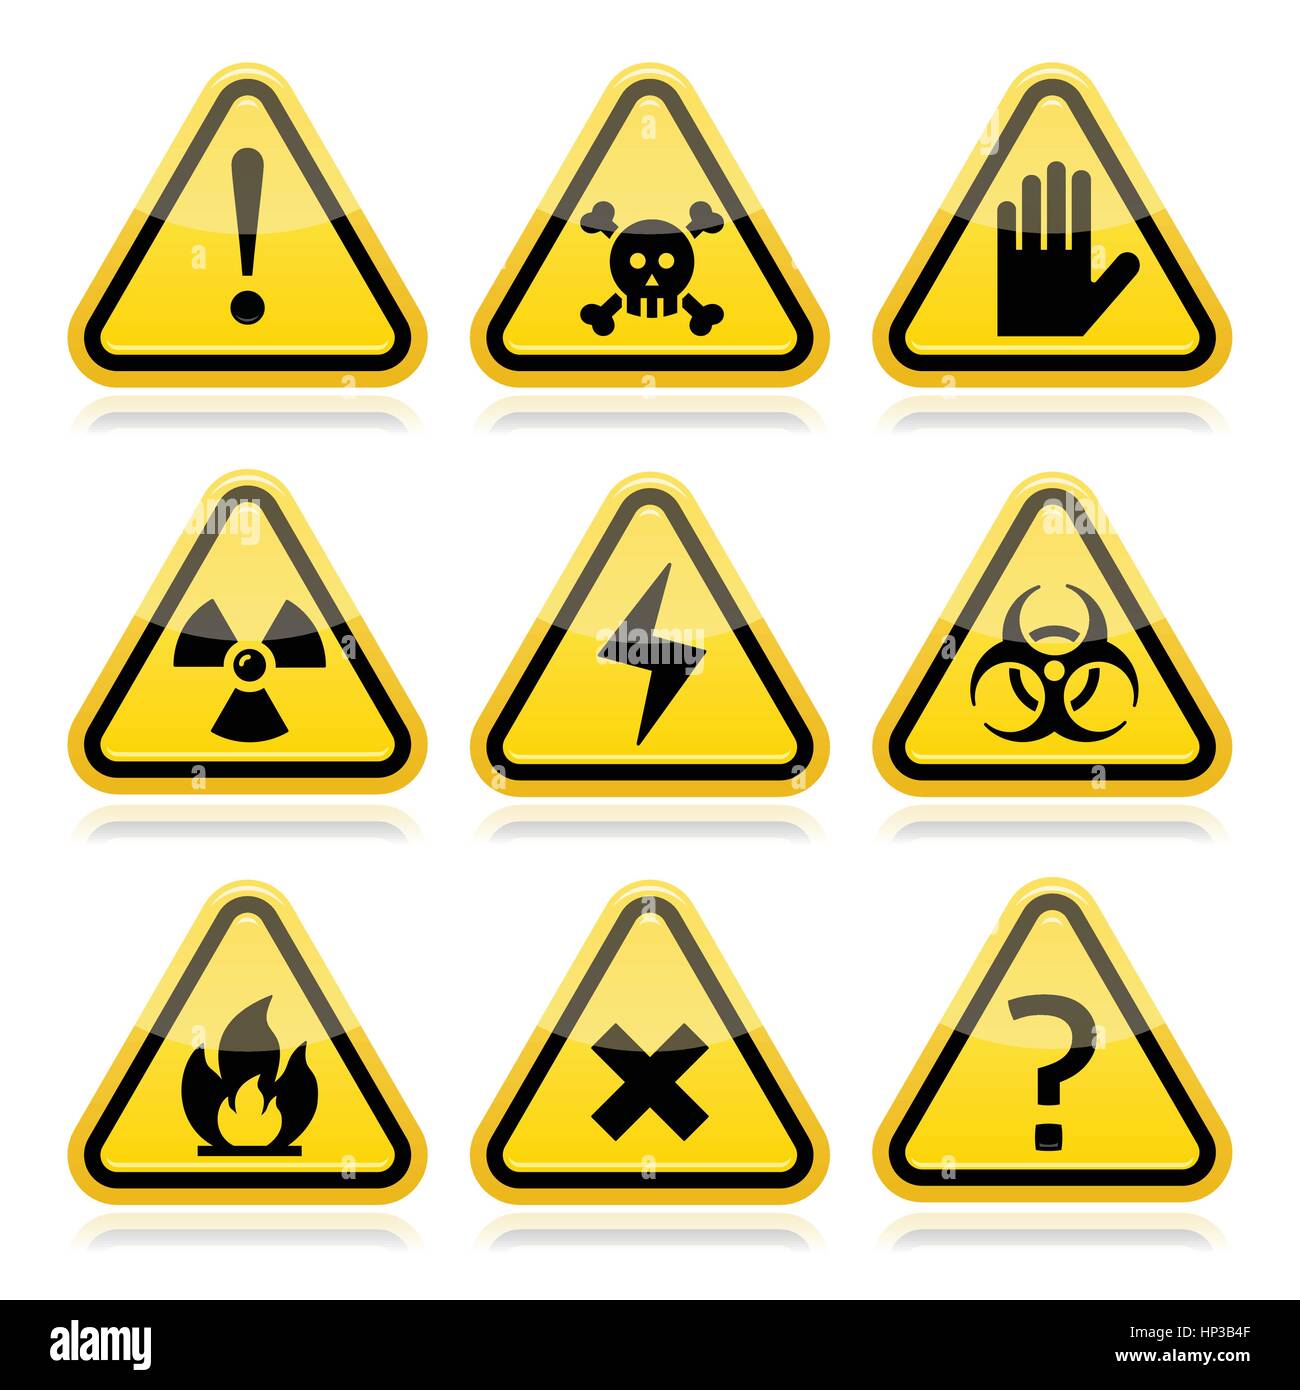 Danger, Avertissement, triangle de signalisation moderne set Illustration de Vecteur